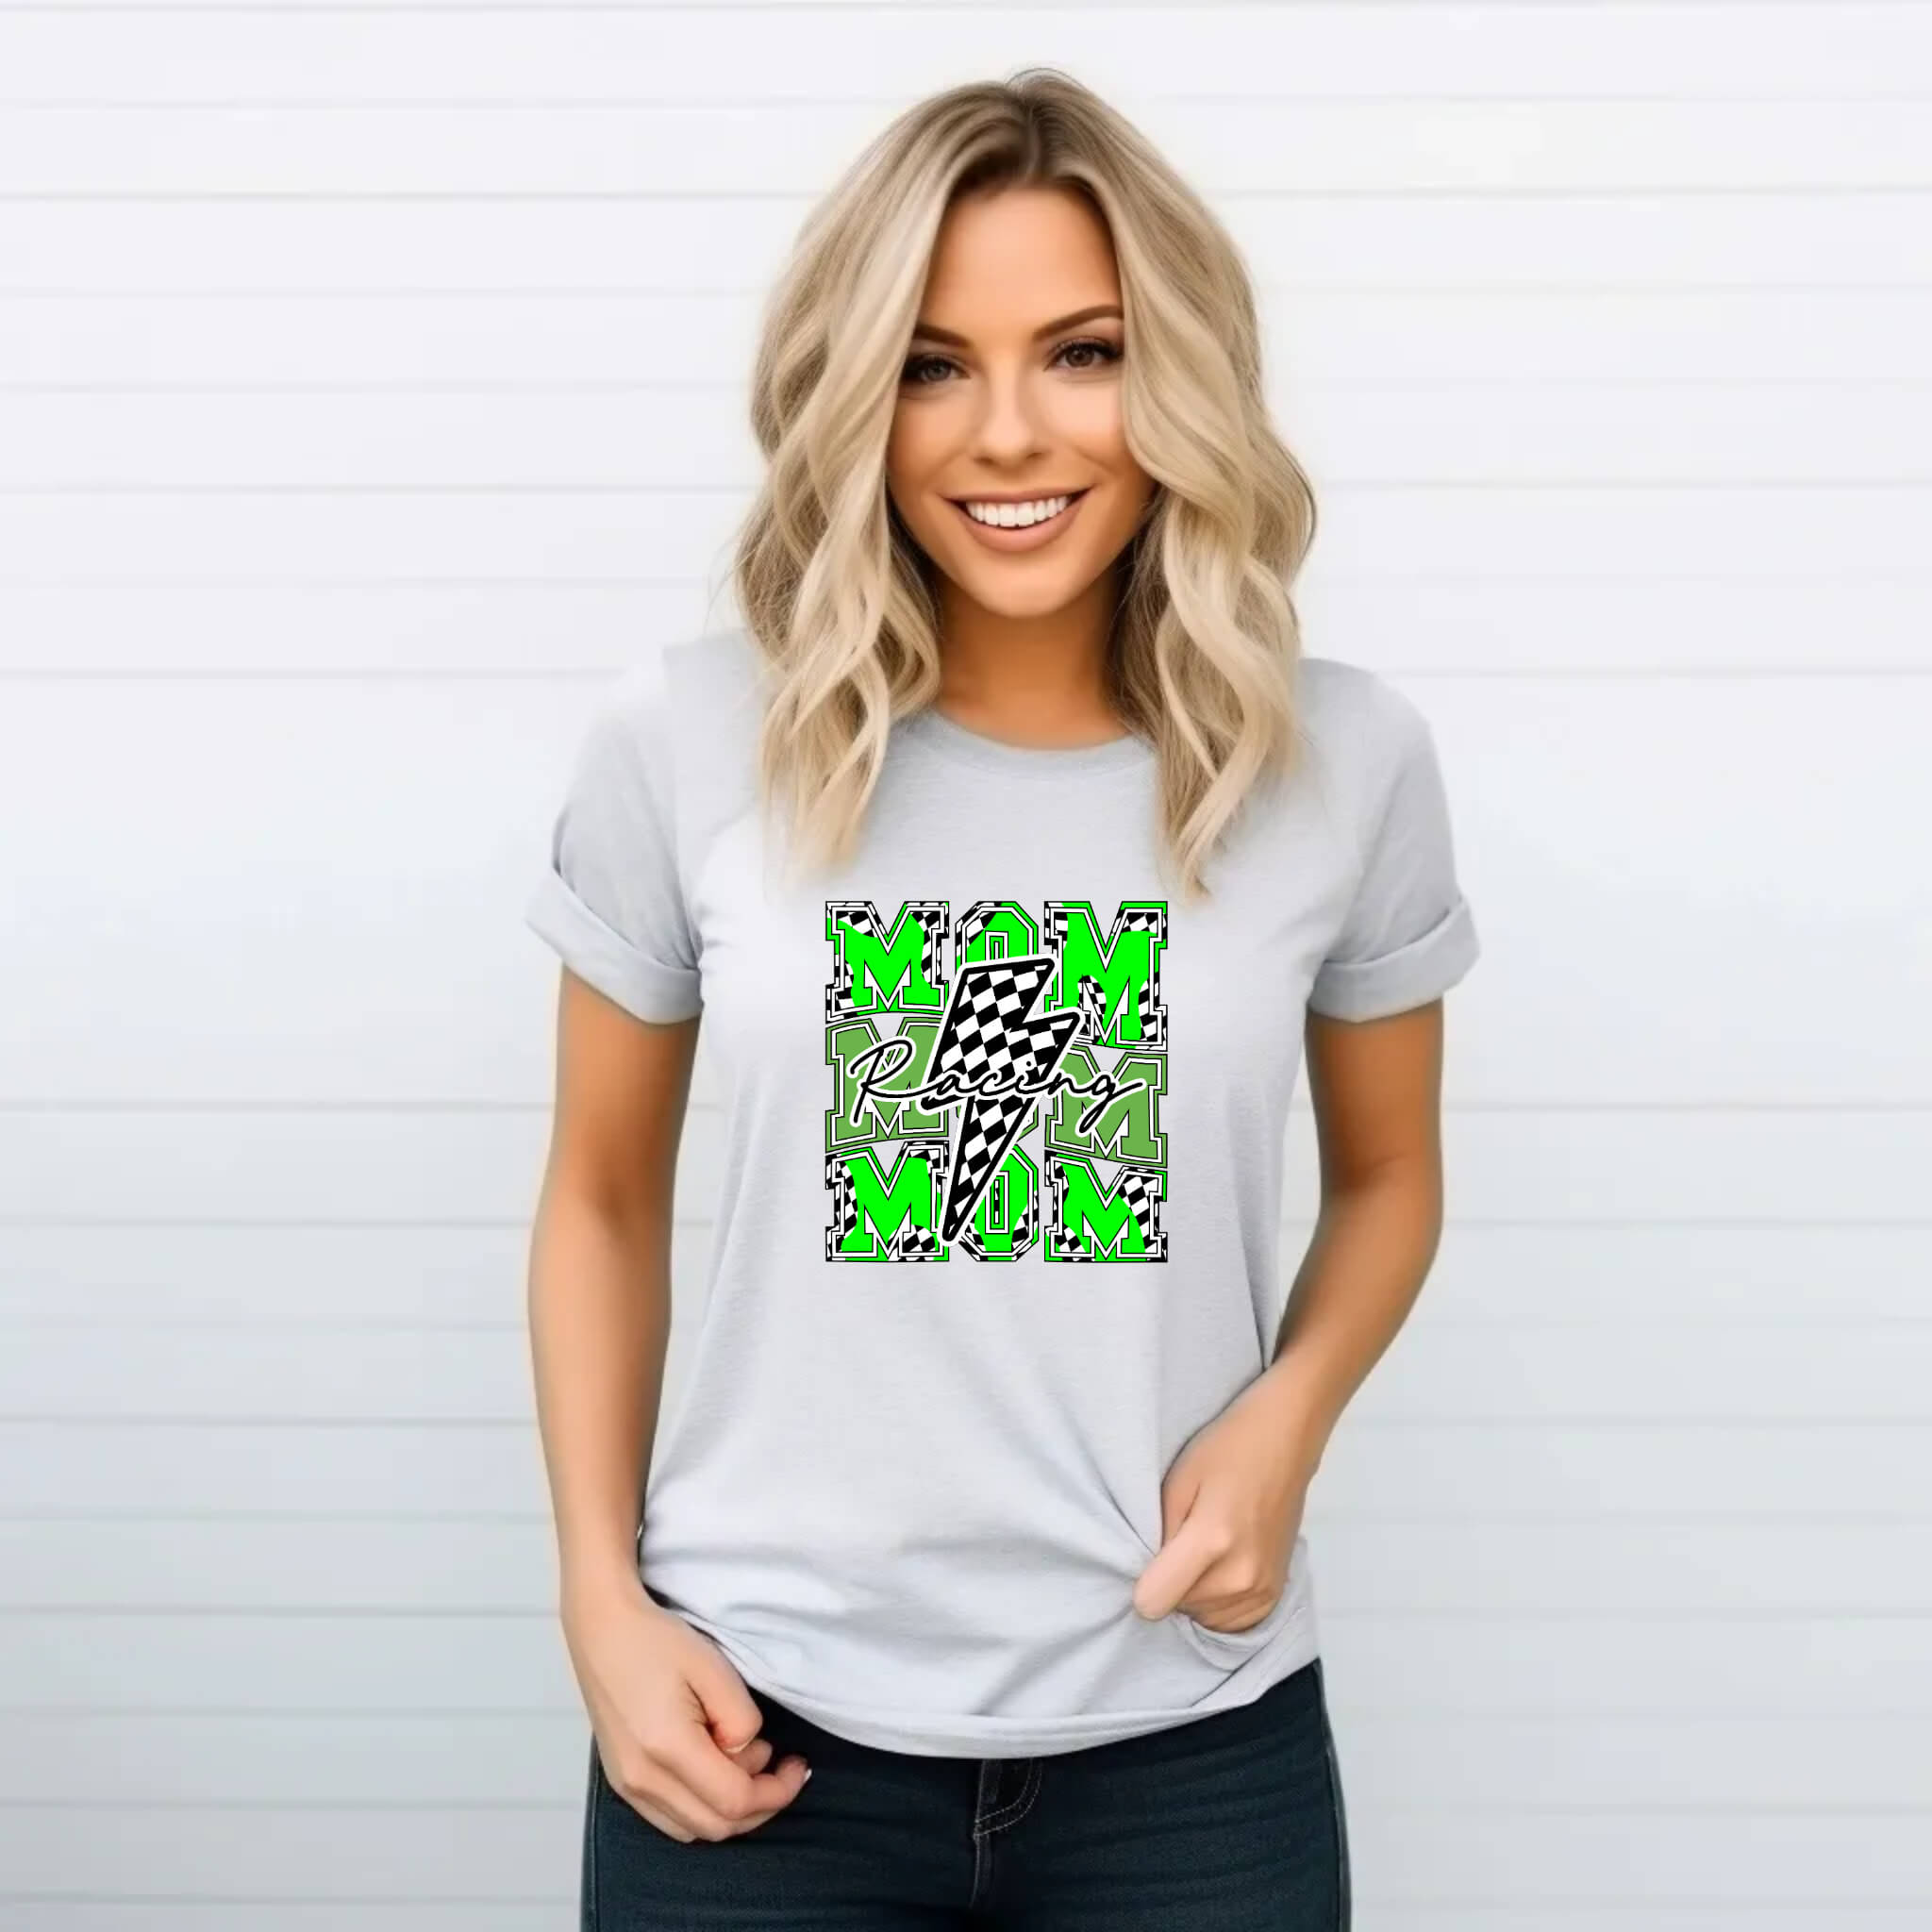 Racing - Racing Mom Customizable Women's Graphic Print T-Shirt